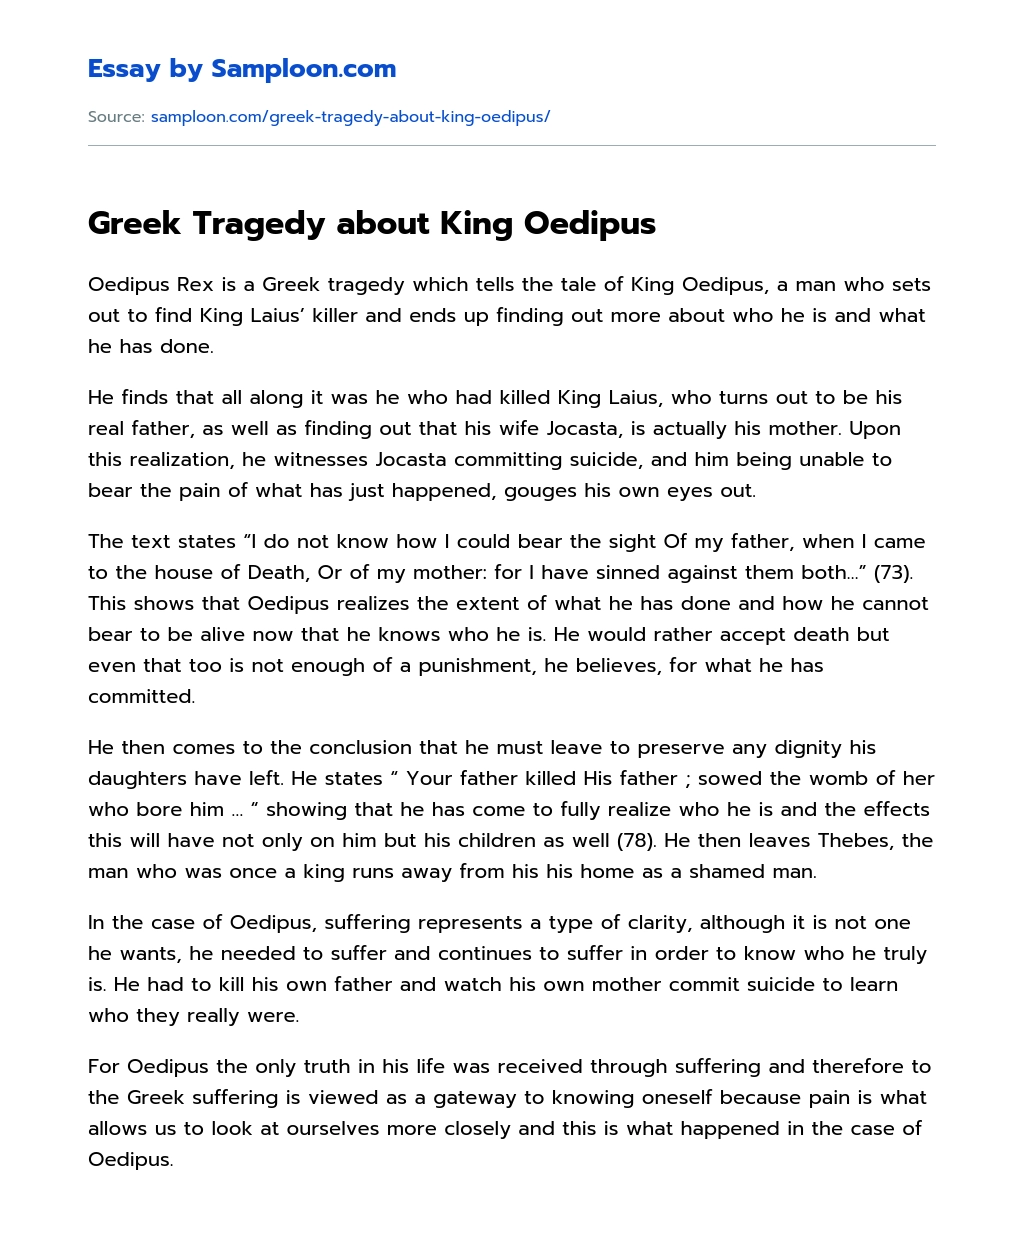 Greek Tragedy about King Oedipus essay